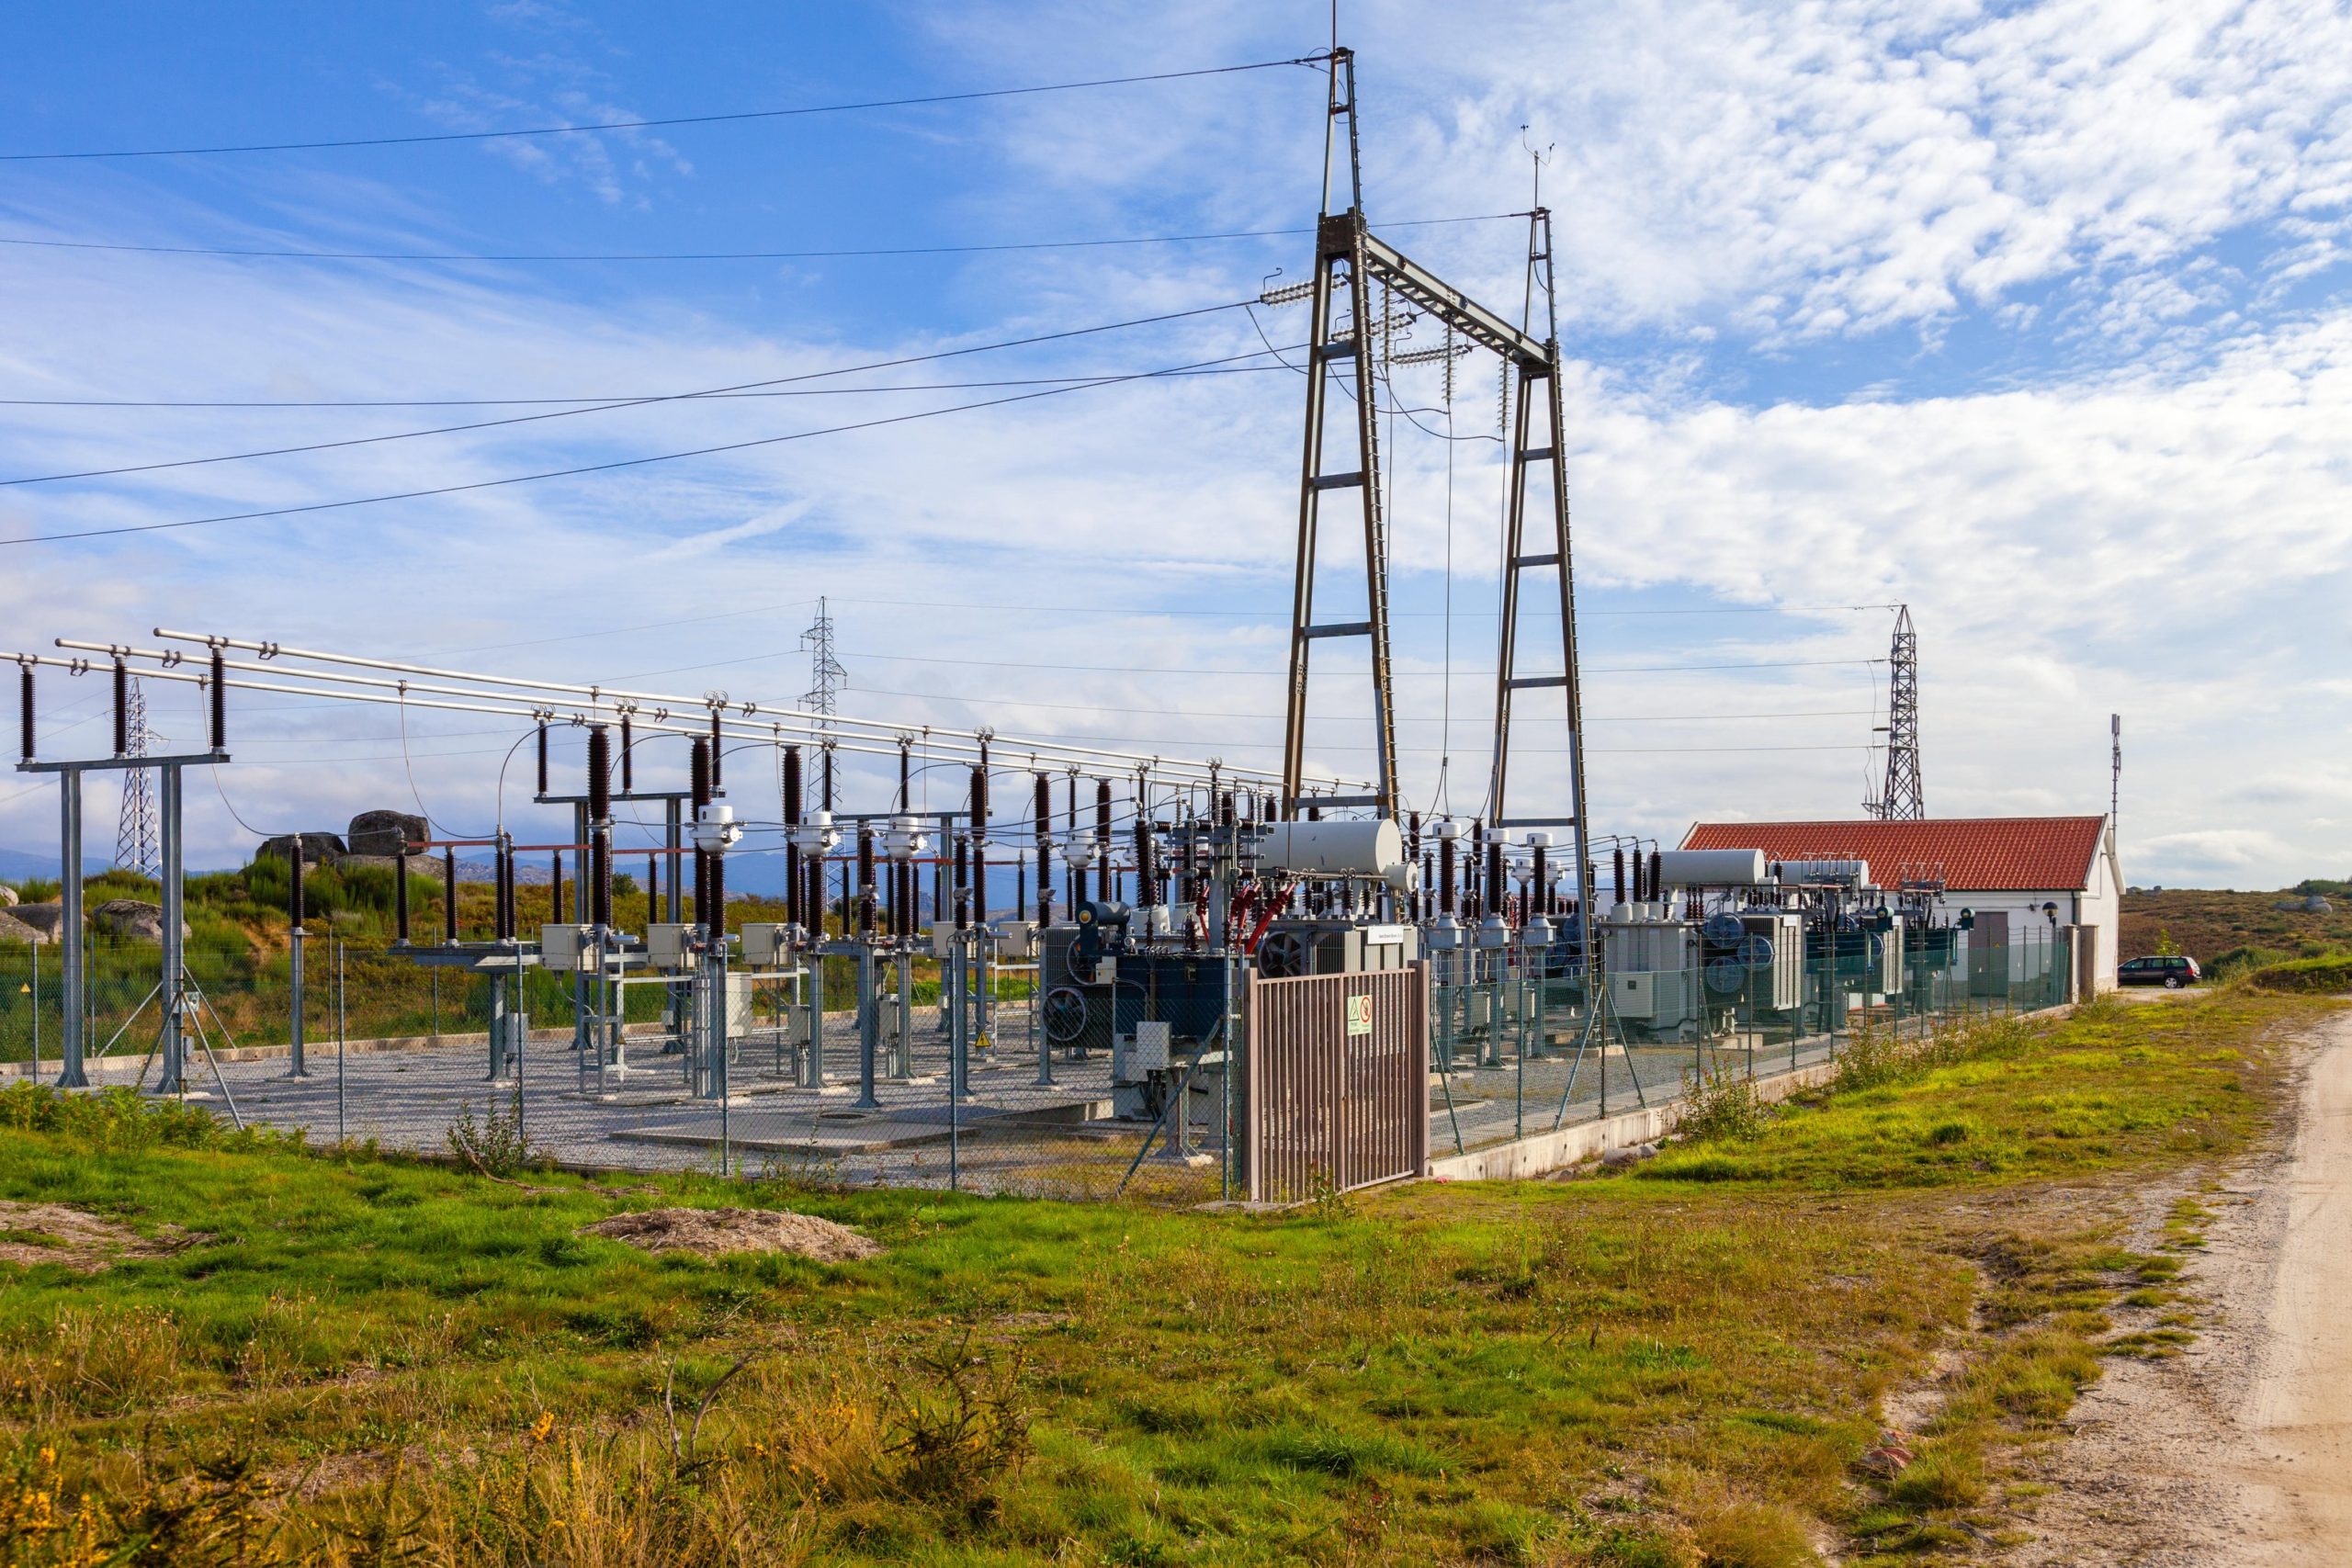 275 kV Substation Plant, United Kingdom